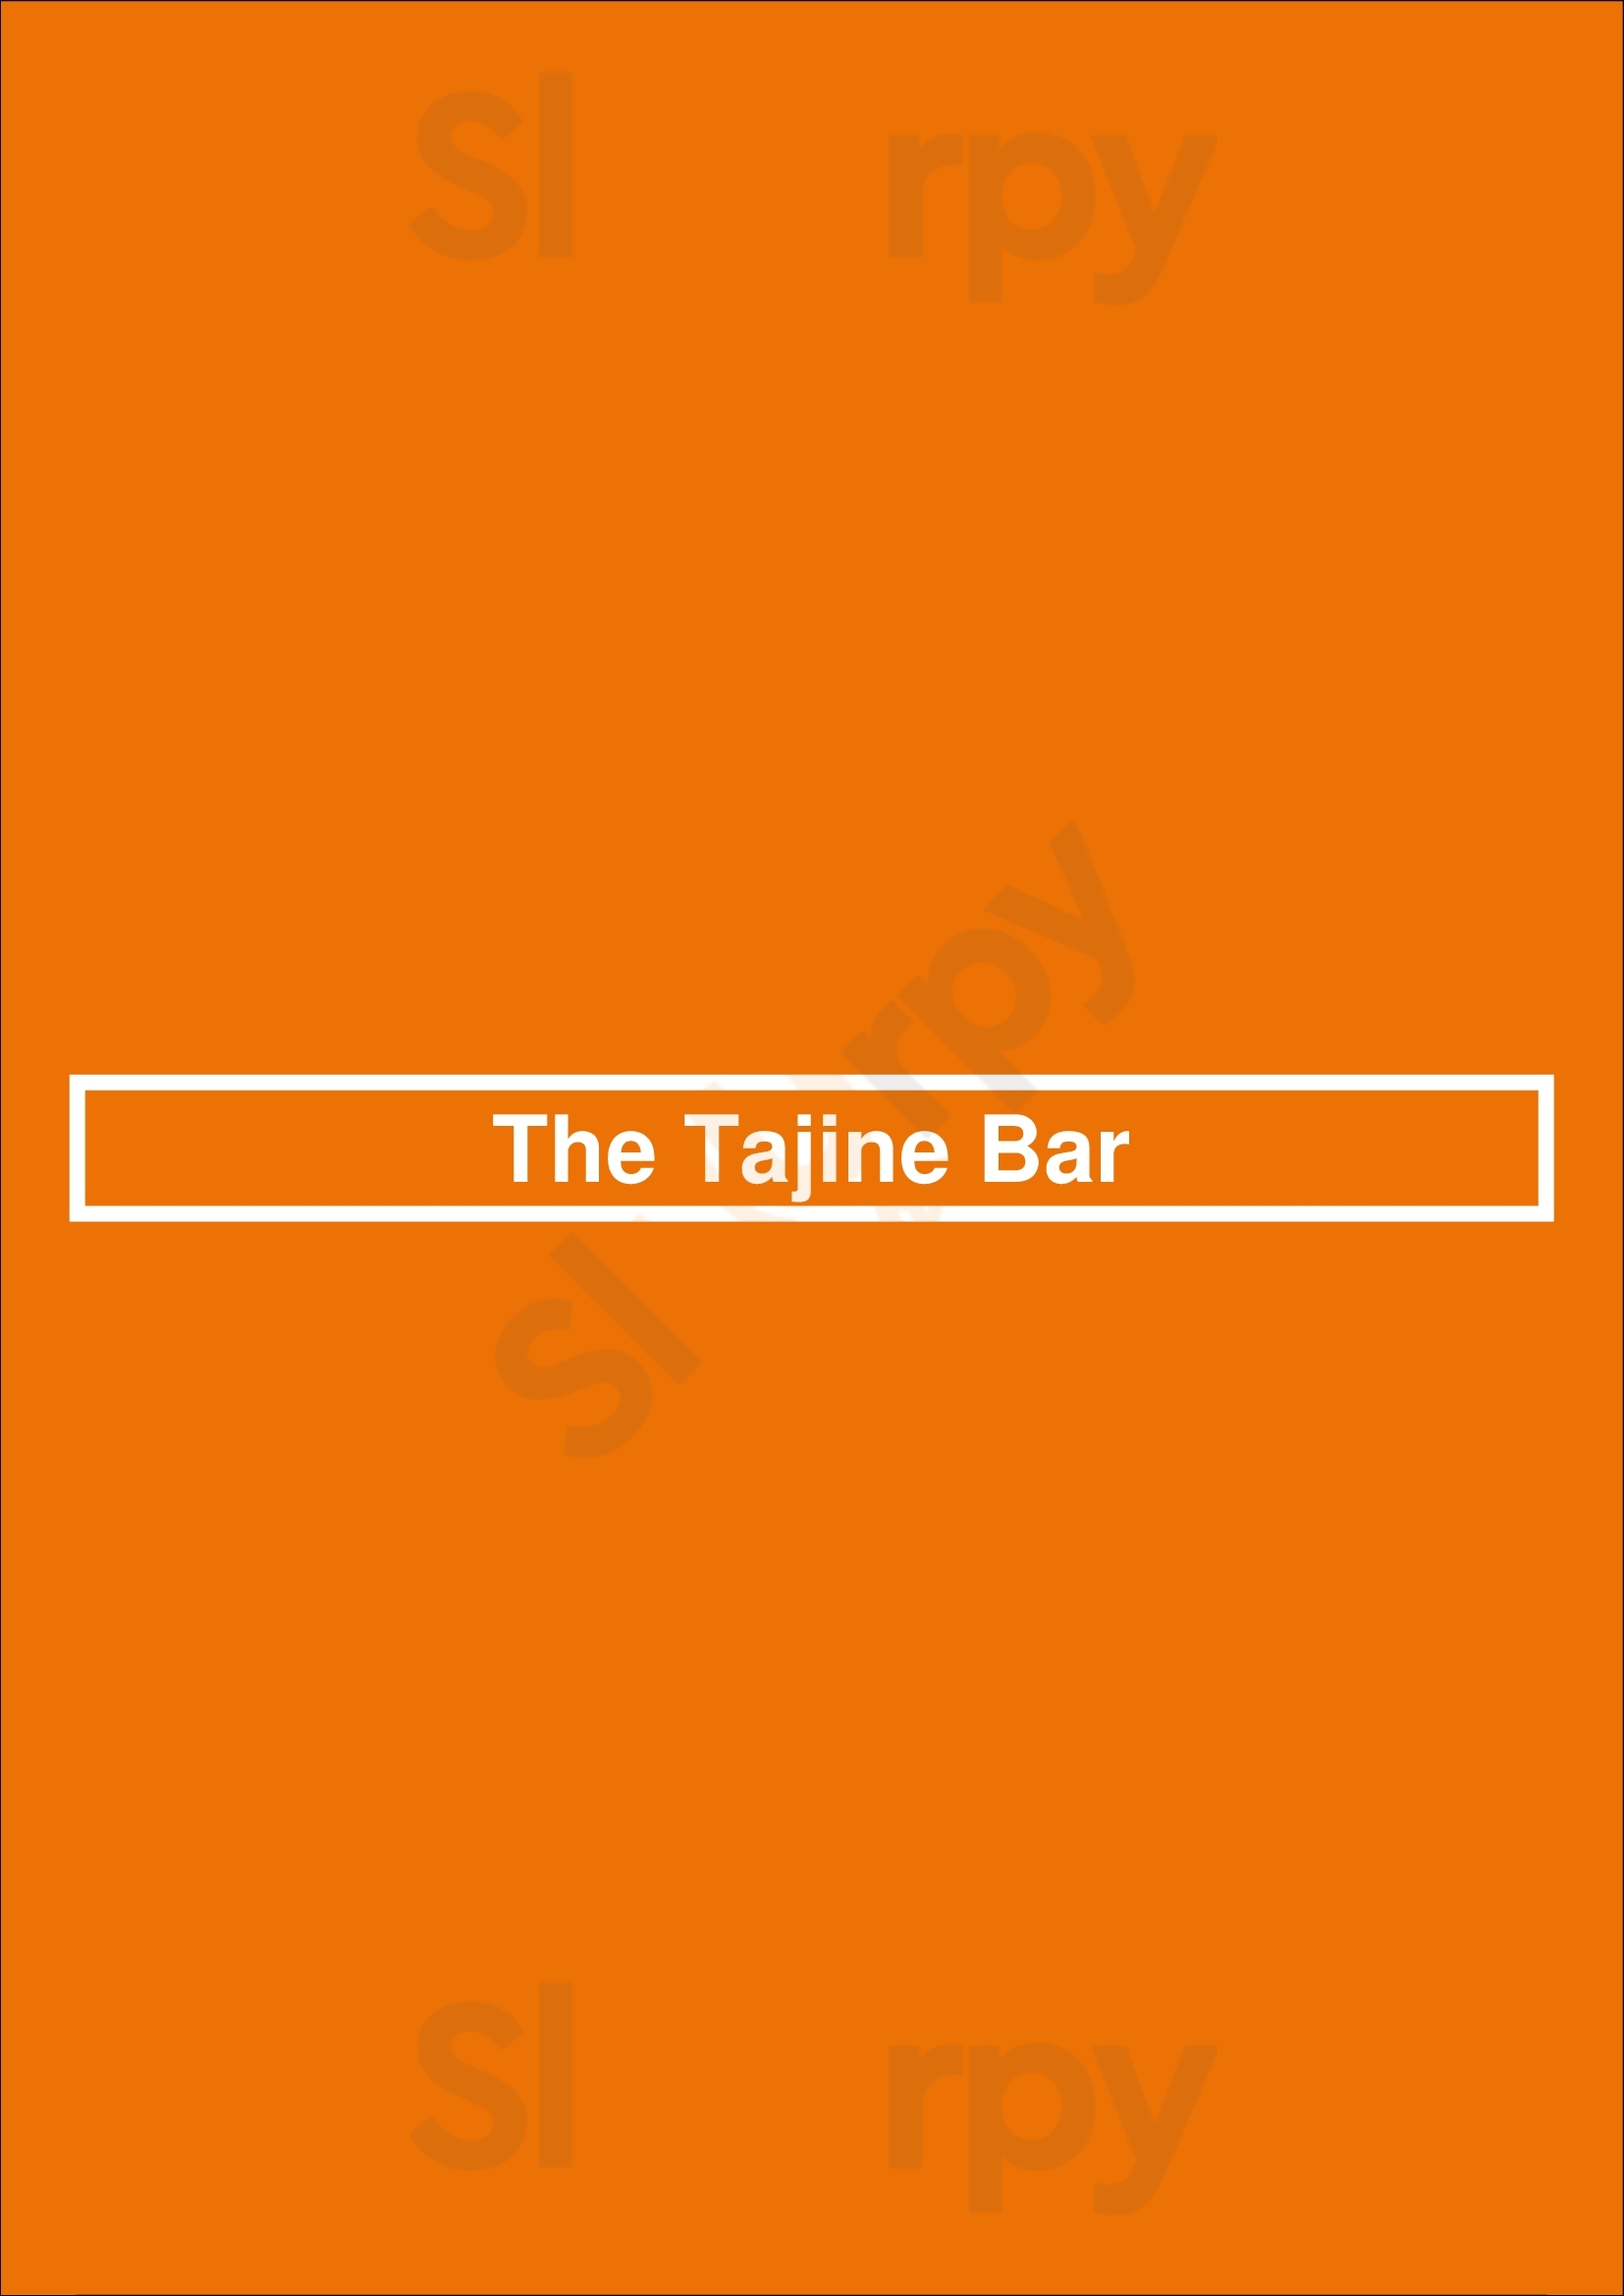 The Tajine Bar Amsterdam Menu - 1